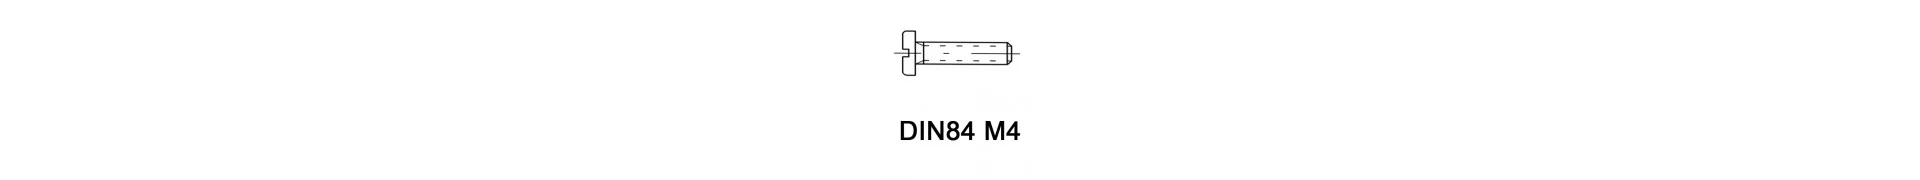 DIN84 M4